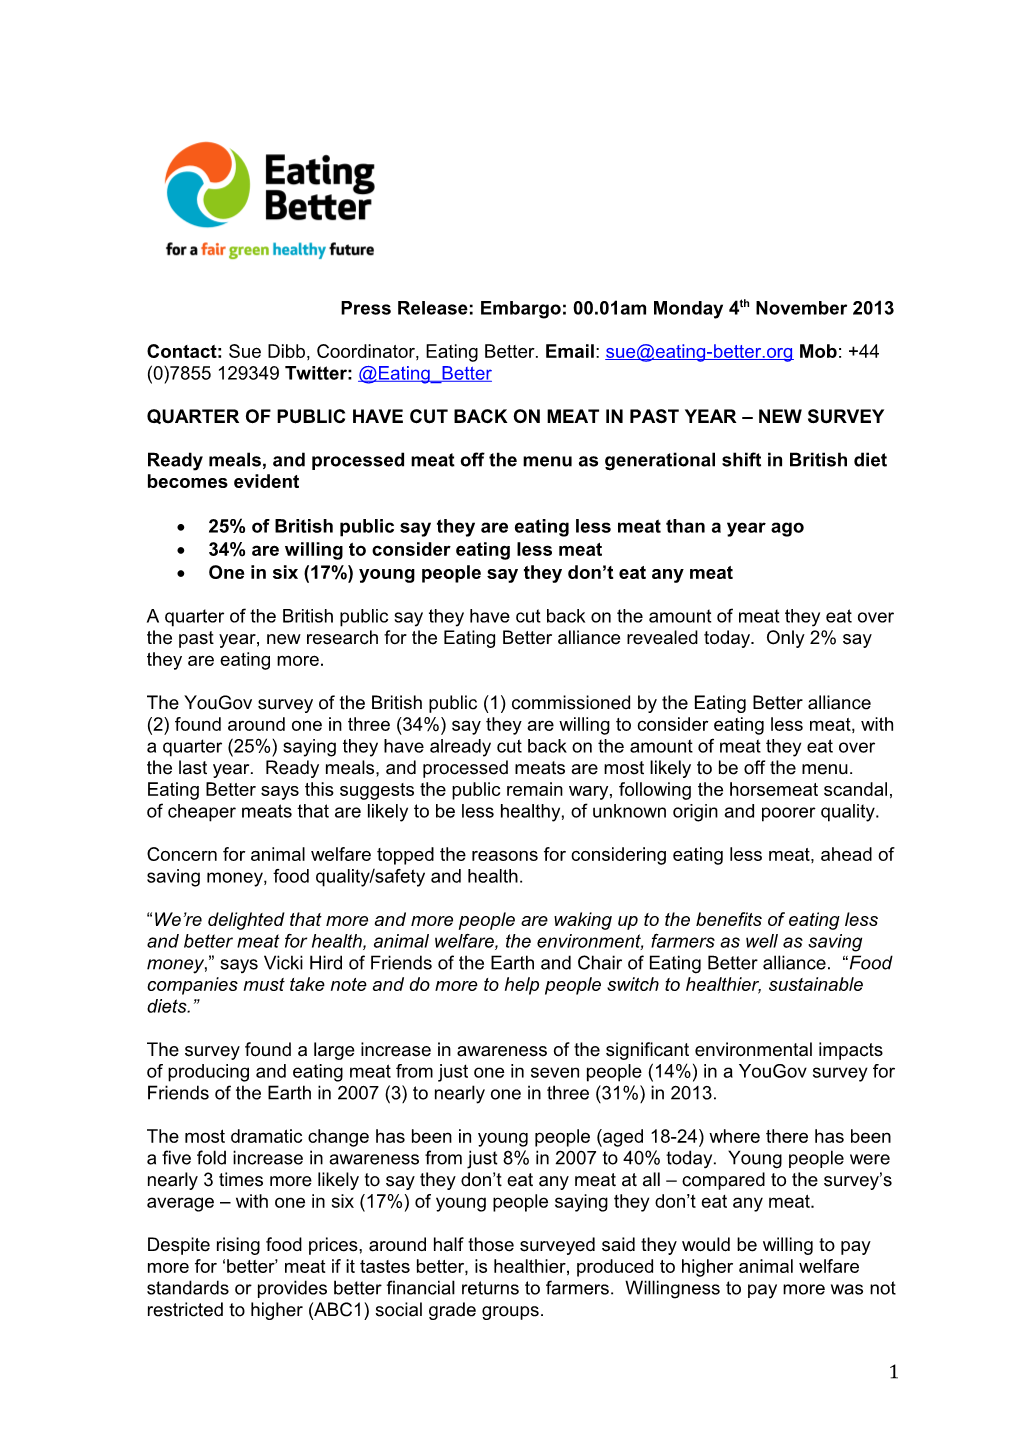 Press Release: Embargo: 00.01Am Monday 4Th November 2013